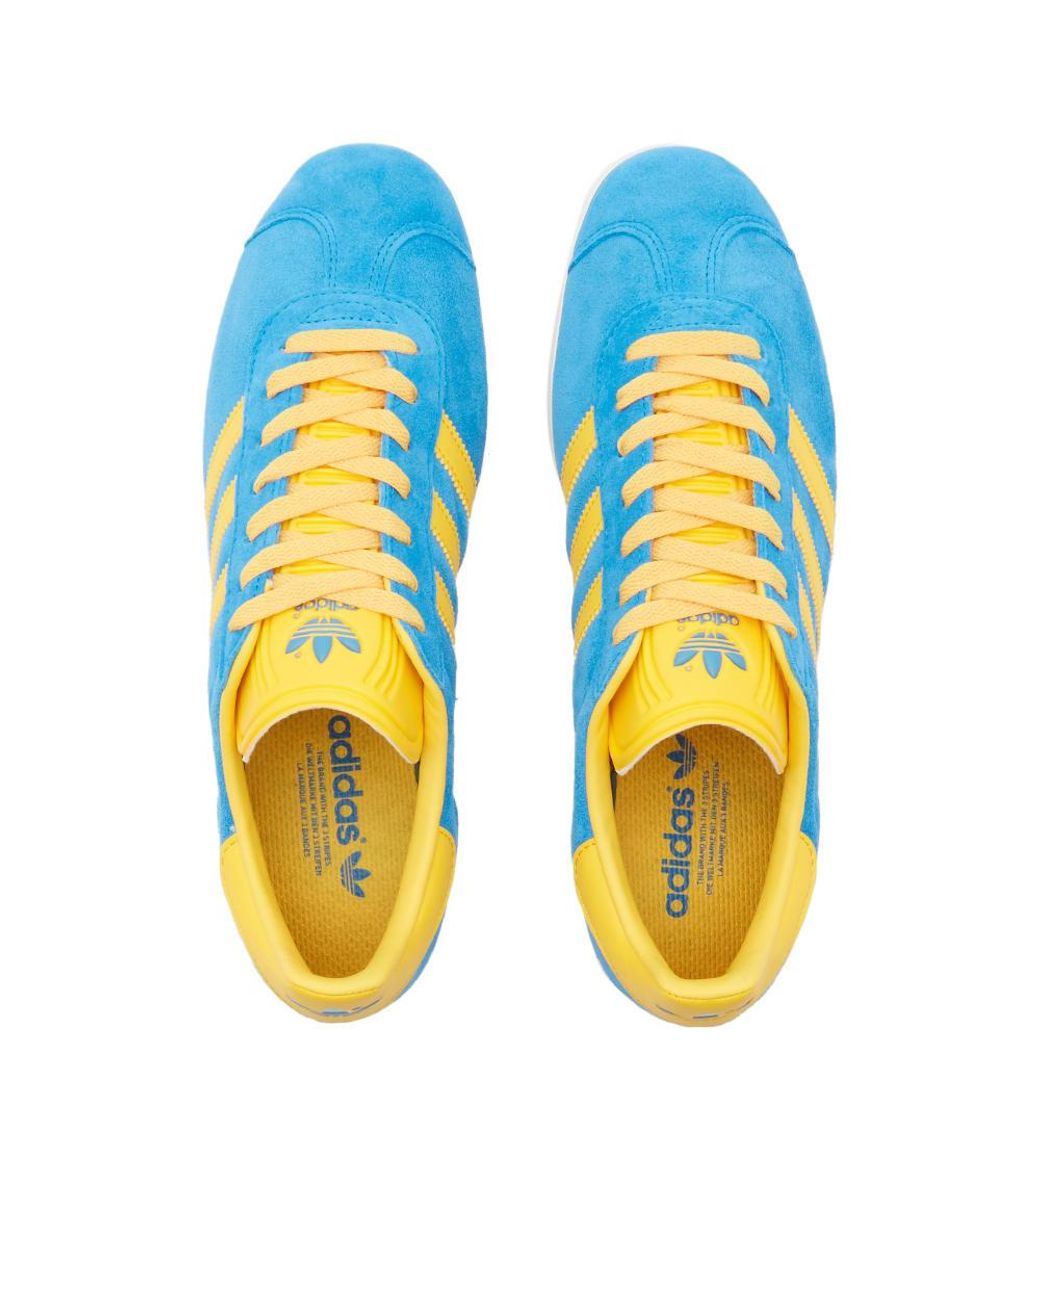 adidas gazelle trainers golden yellow blue